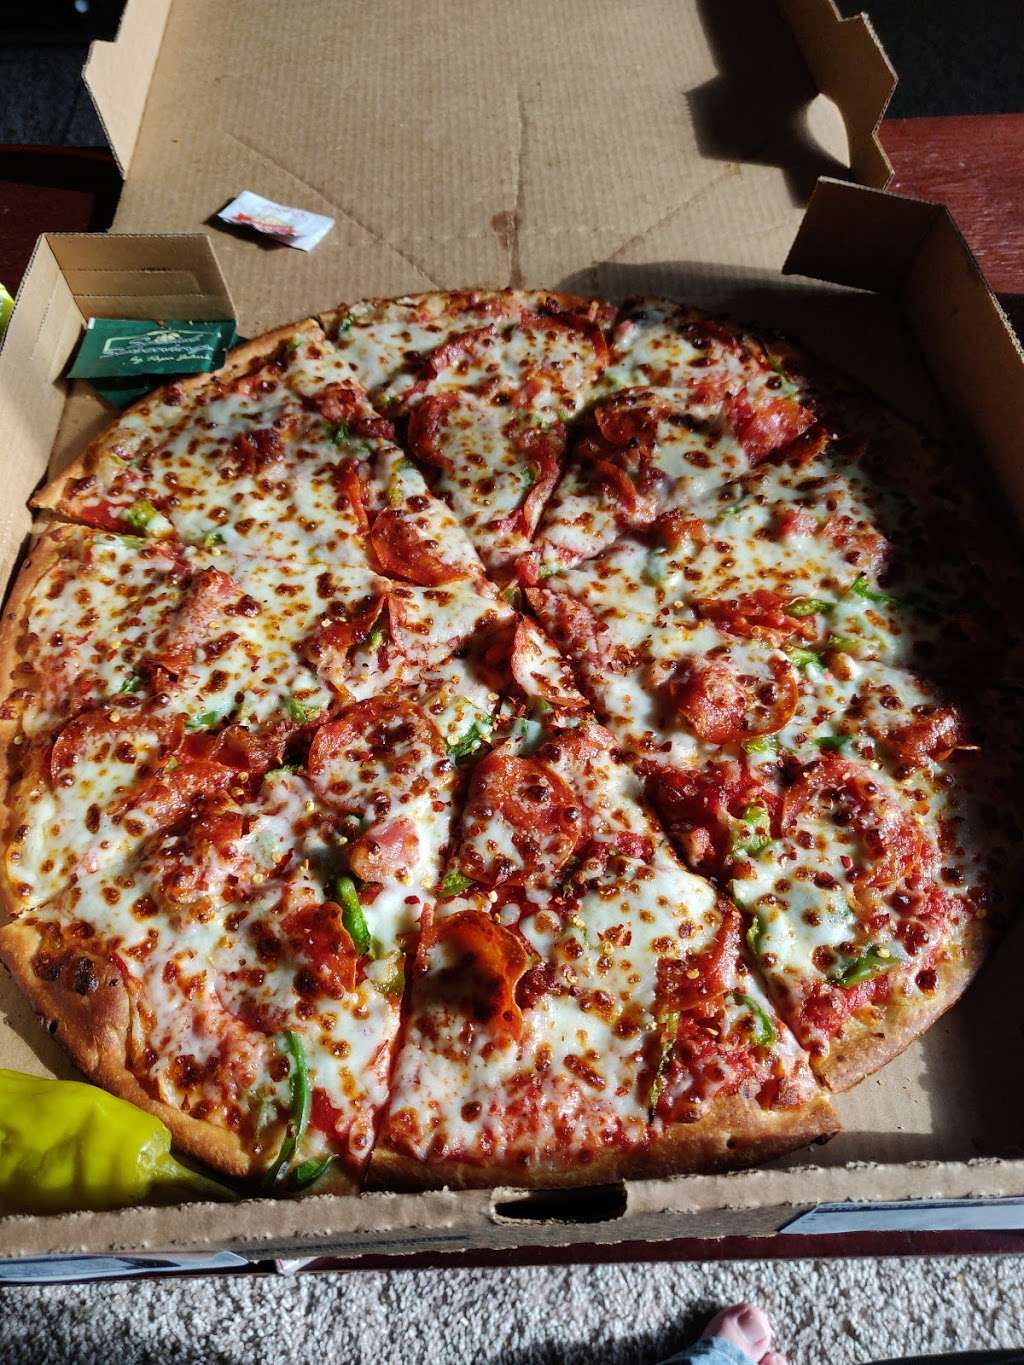 Papa Johns Pizza | 918 Mississippi St, Lawrence, KS 66044, USA | Phone: (785) 865-5775